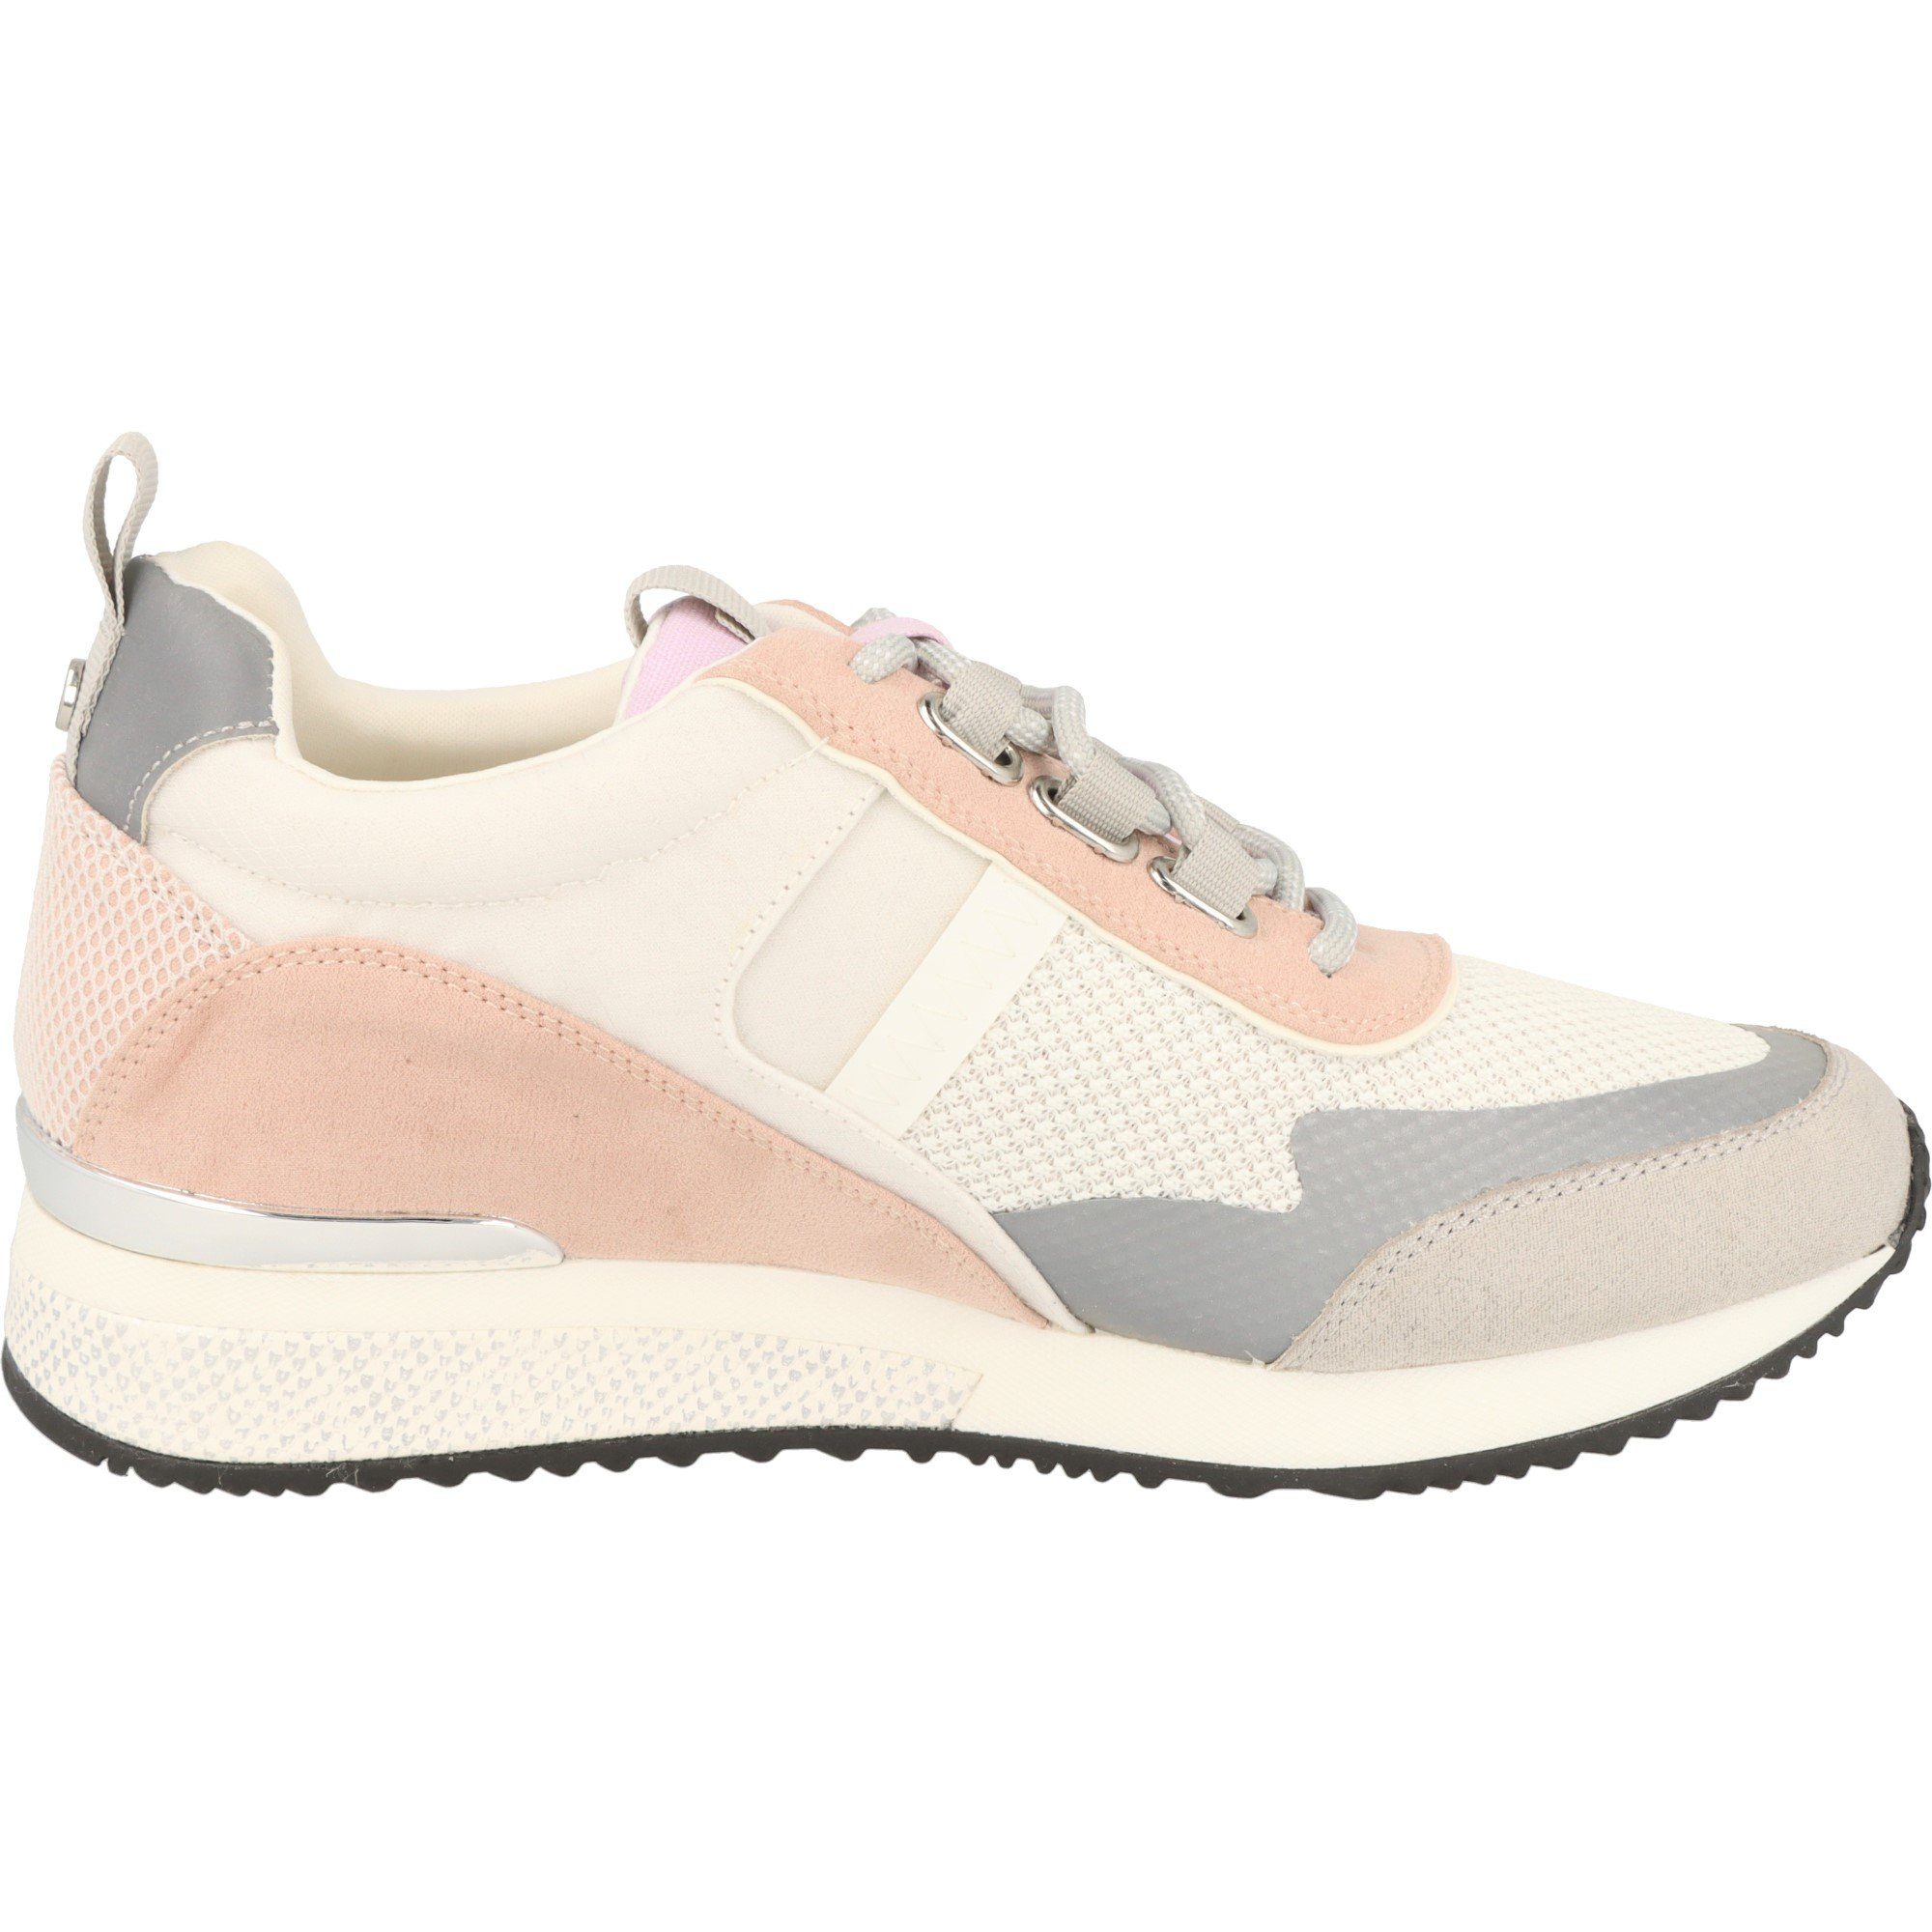 La Halbschuhe 2003156-1002 Sneaker Multi Schuhe Damen Grau Lt.Grey-Pink Strada